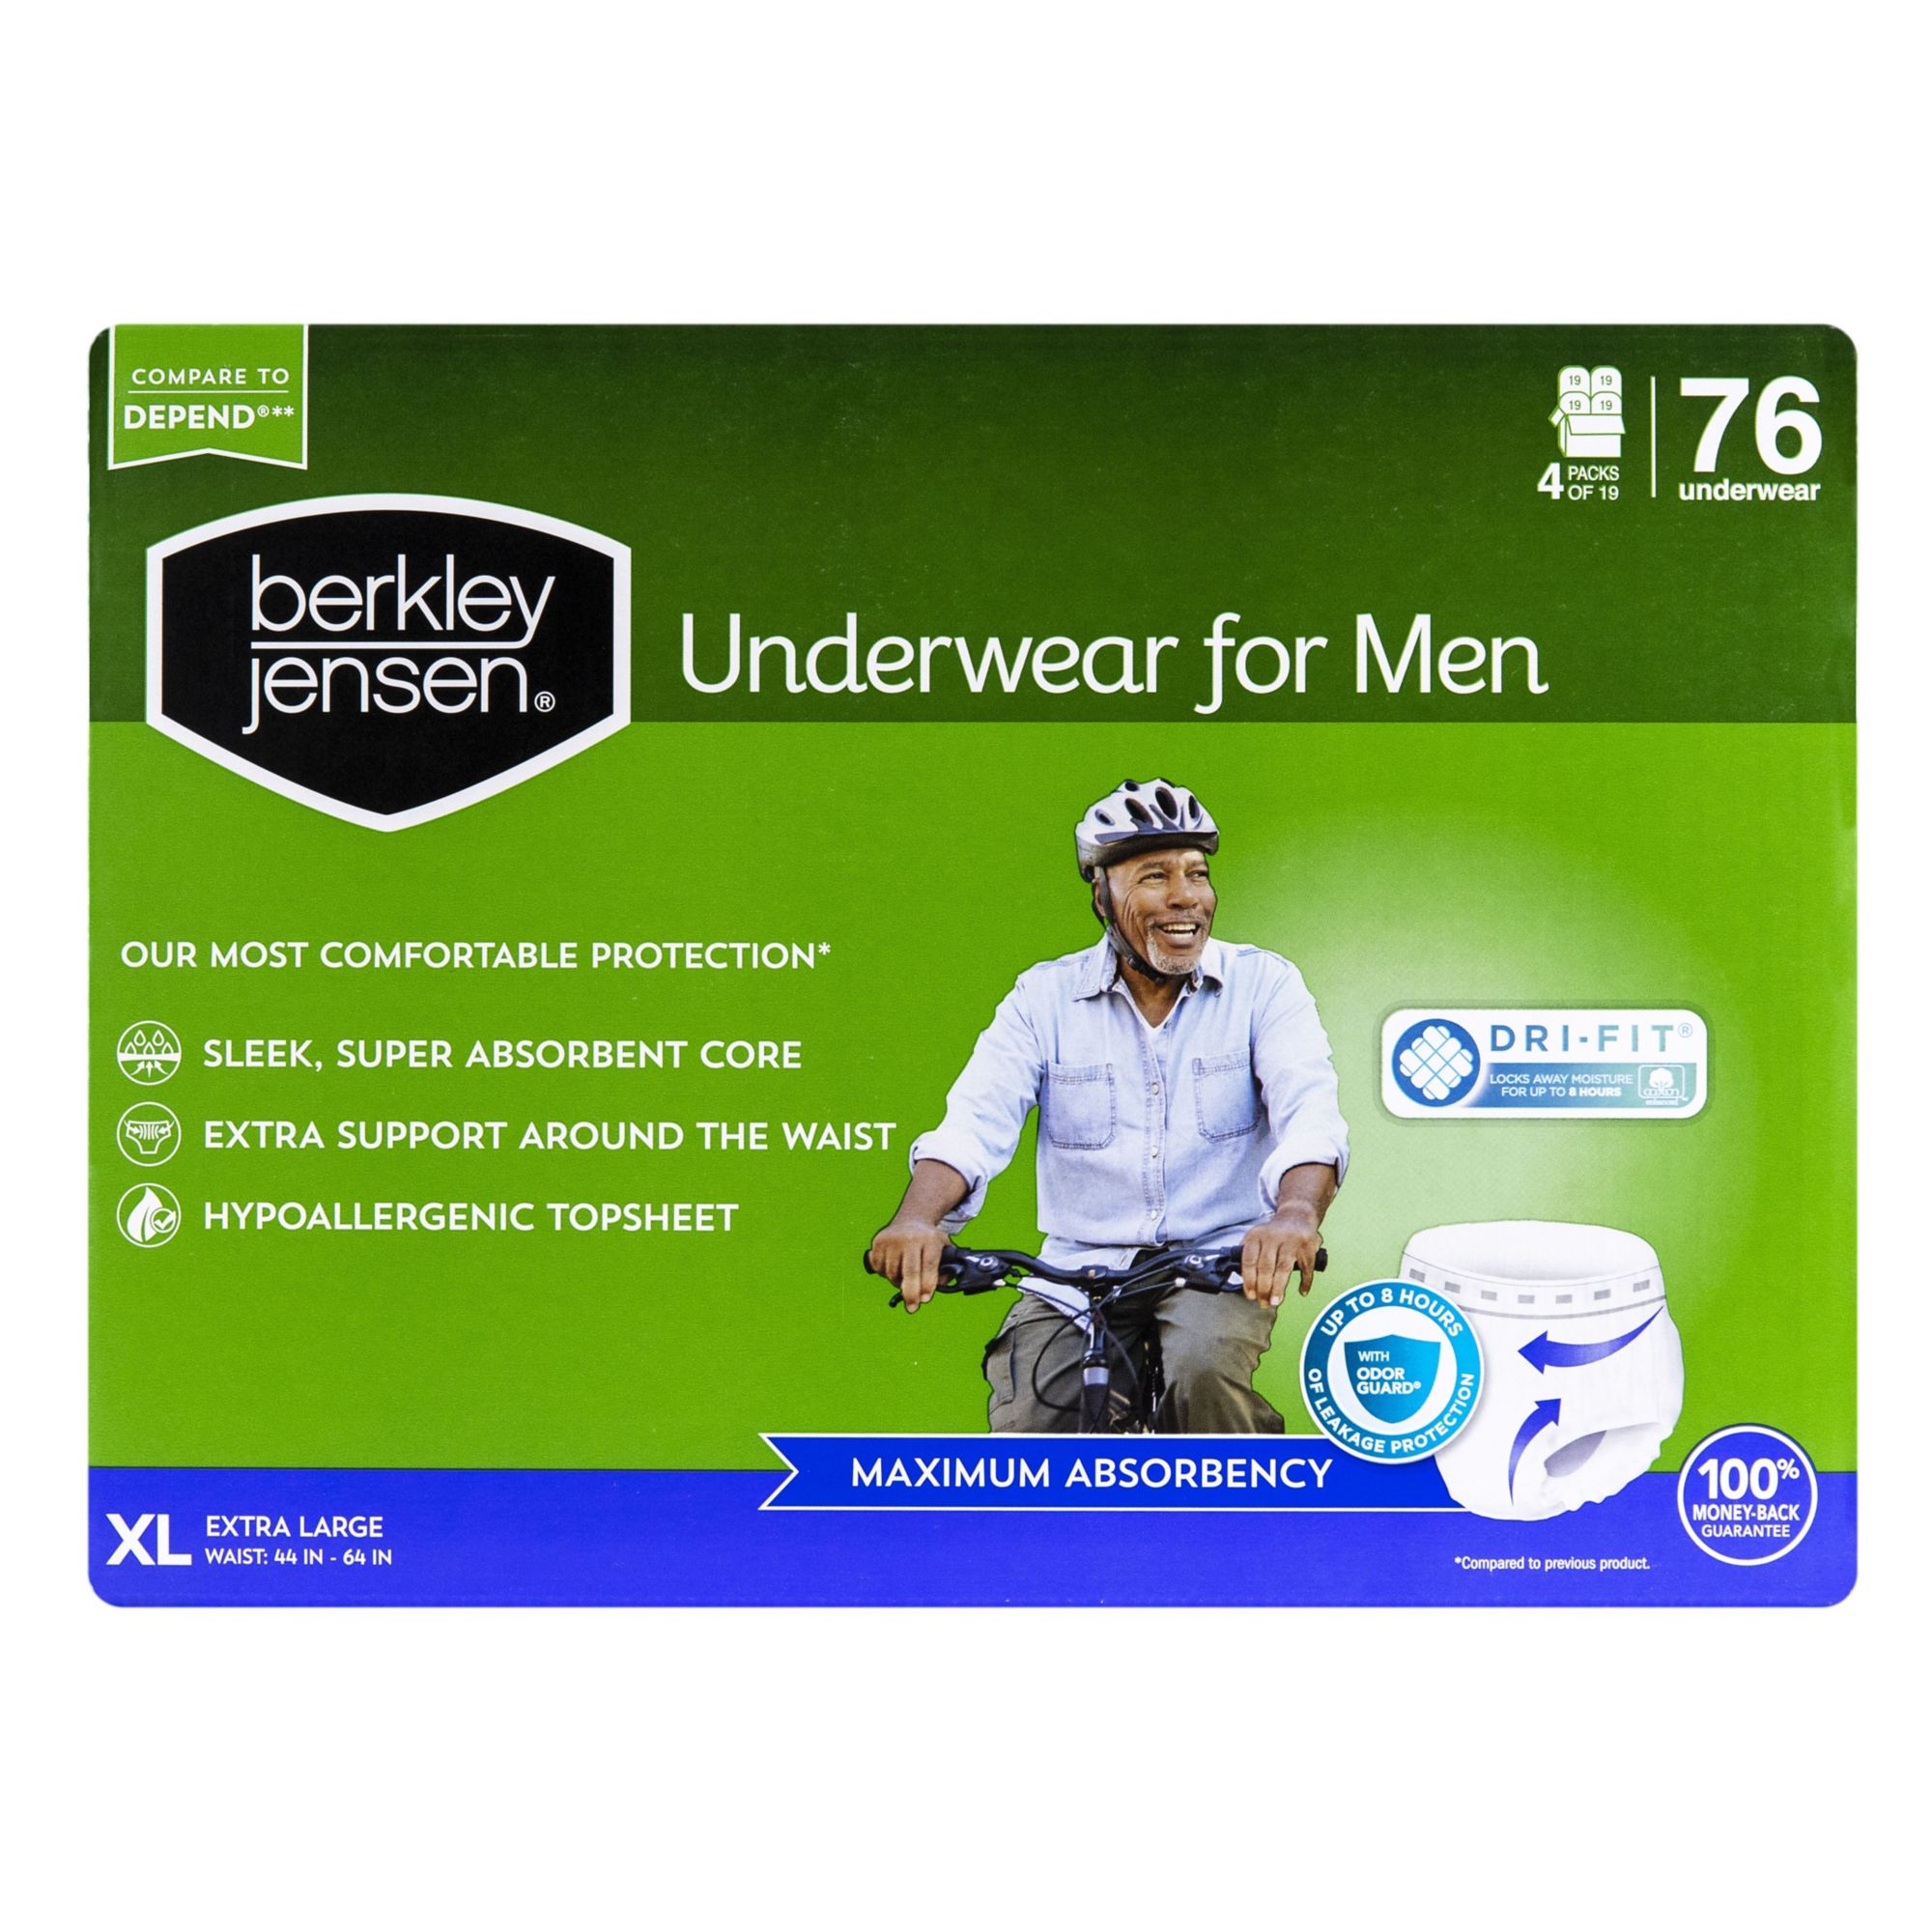 TENA Men Level 4 Pants - Medium - Bulk Saver - 3 Packs of 10